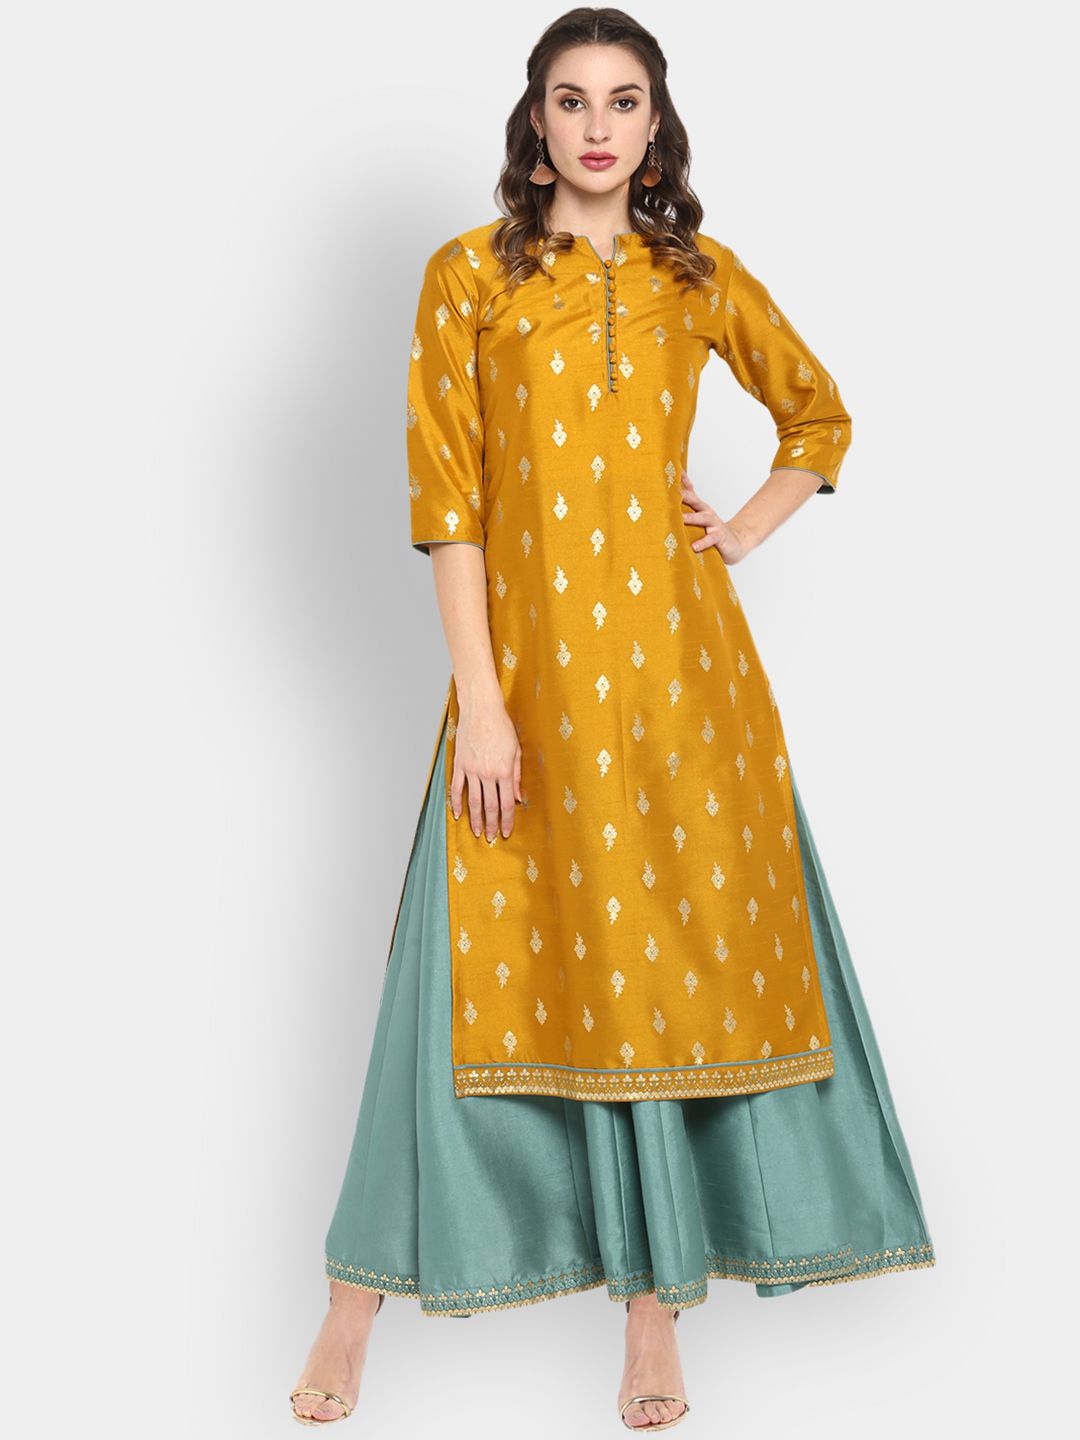 Janasya Women Mustard Yellow & Green Printed Fit and Flare Layered Dress Price in India